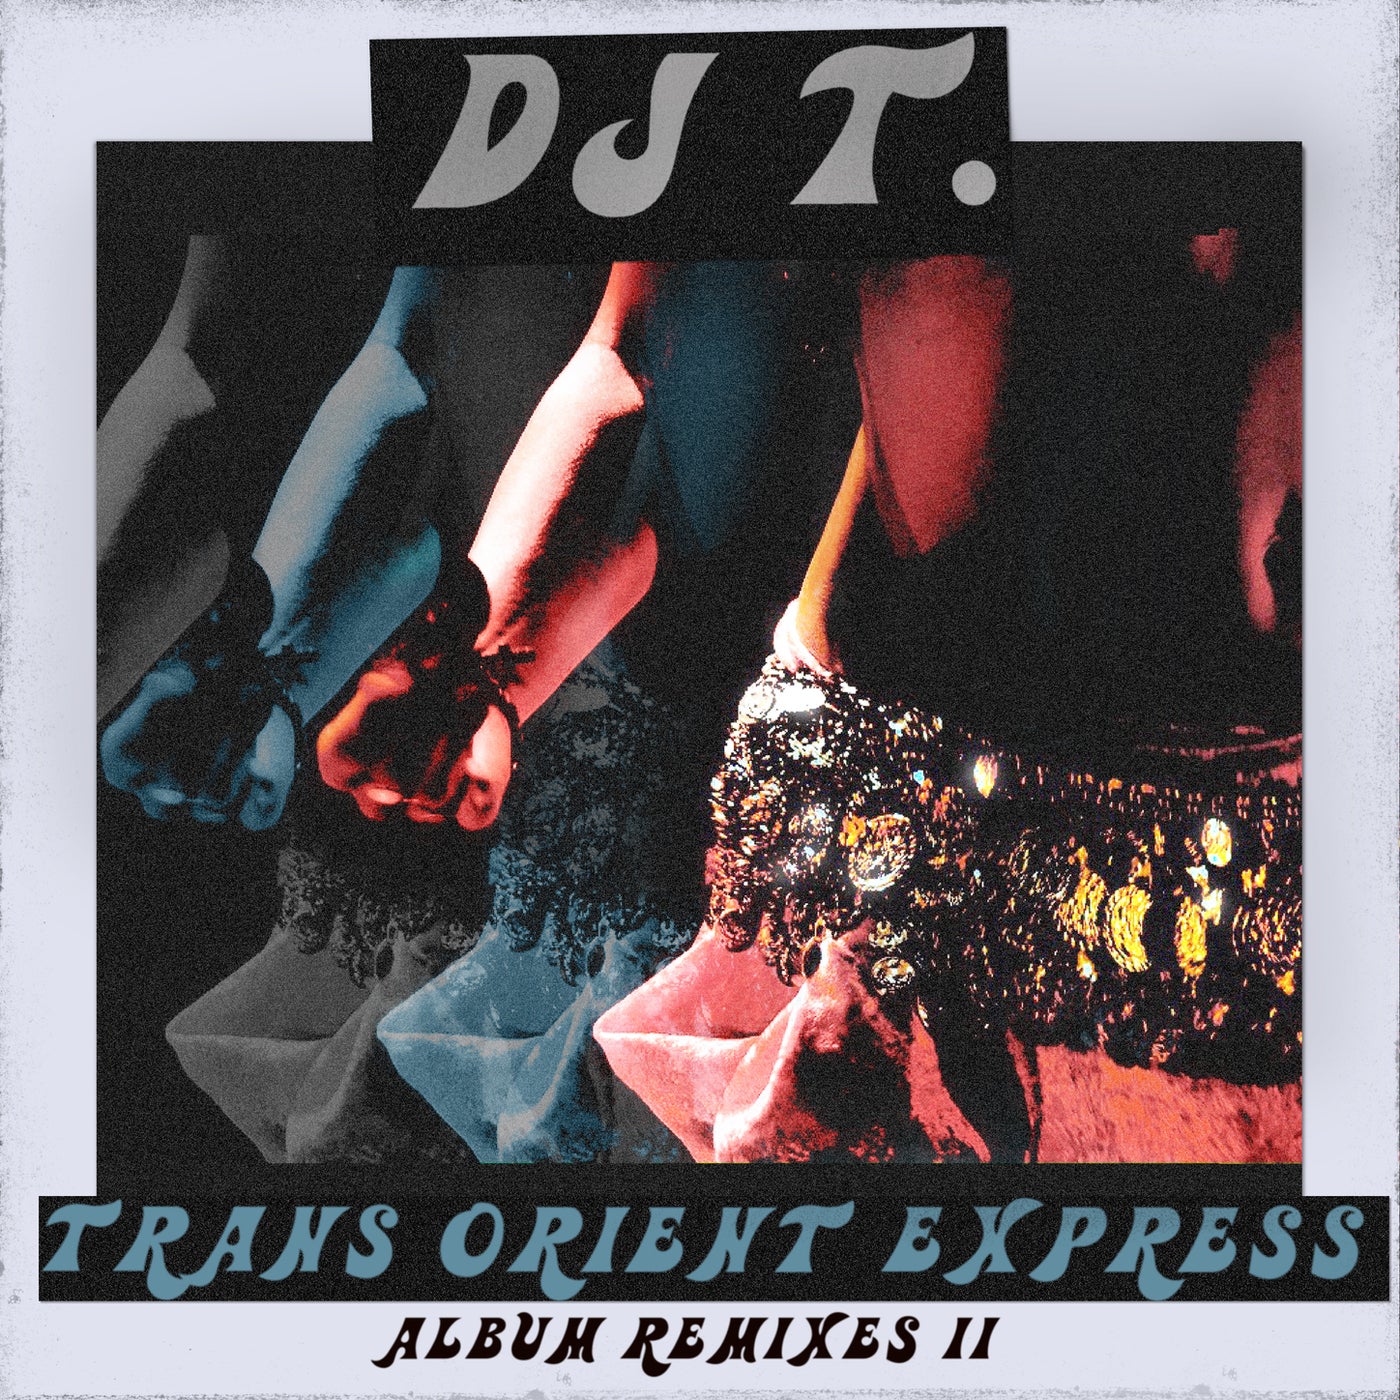 Download Trans Orient Express (Album Remixes II) on Electrobuzz